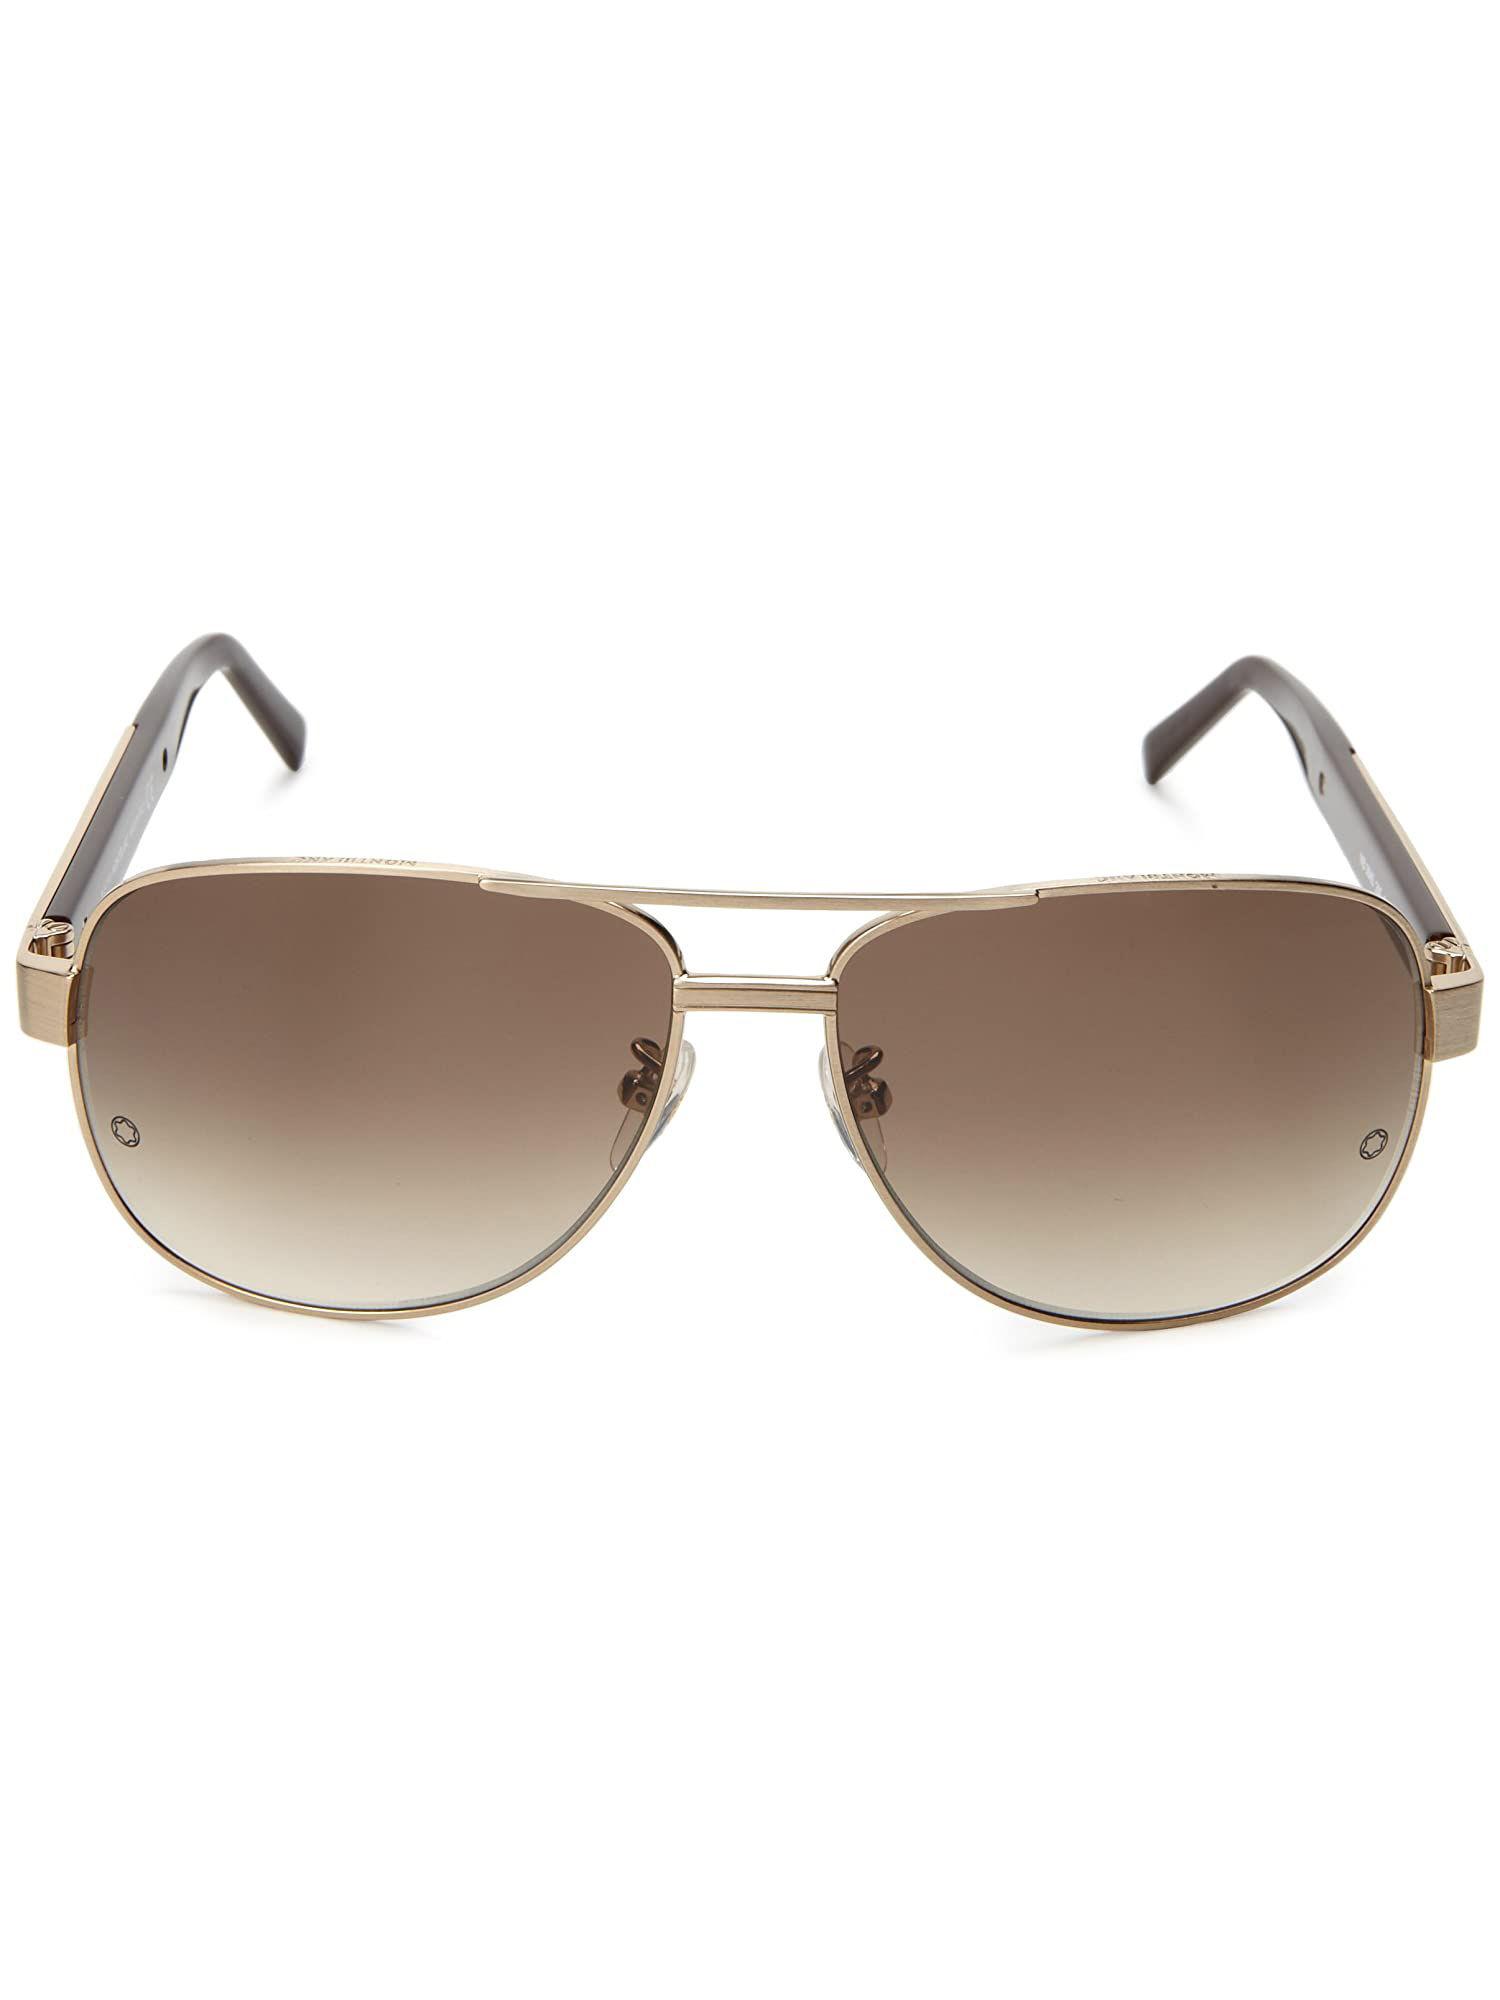 brown plastic sunglasses